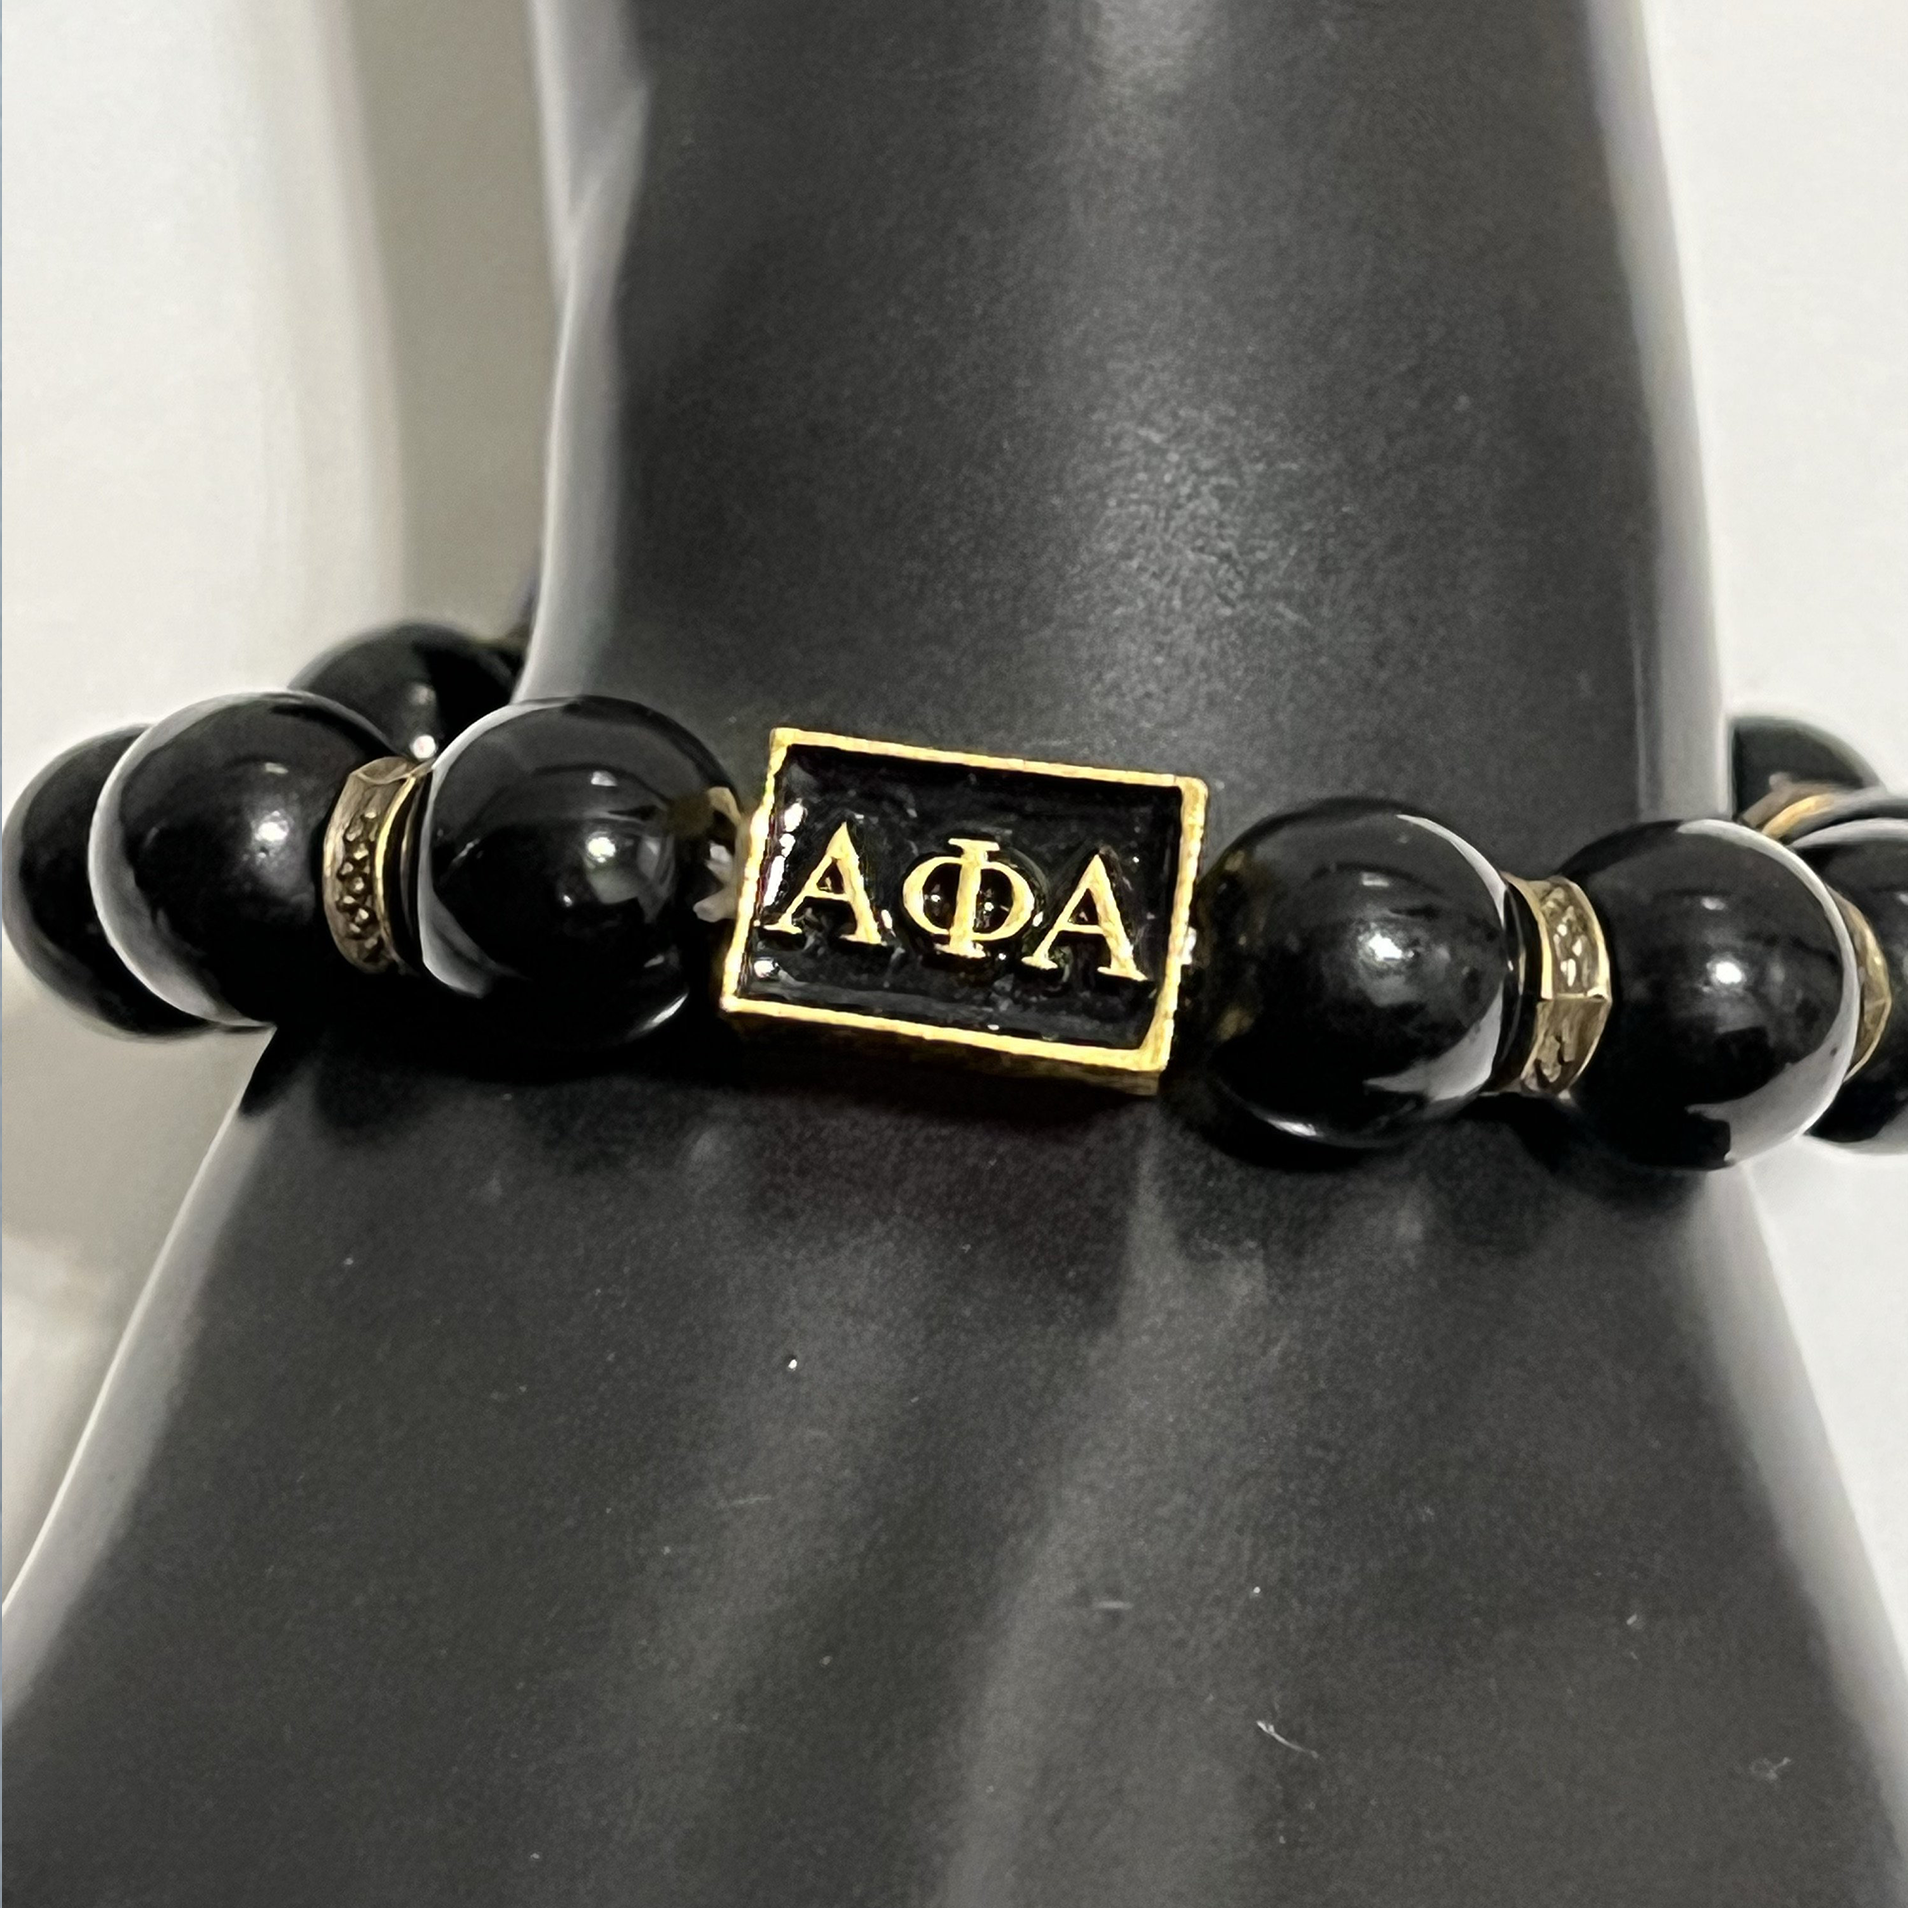 Divine 9 Fraternity Bracelets & Jewelry